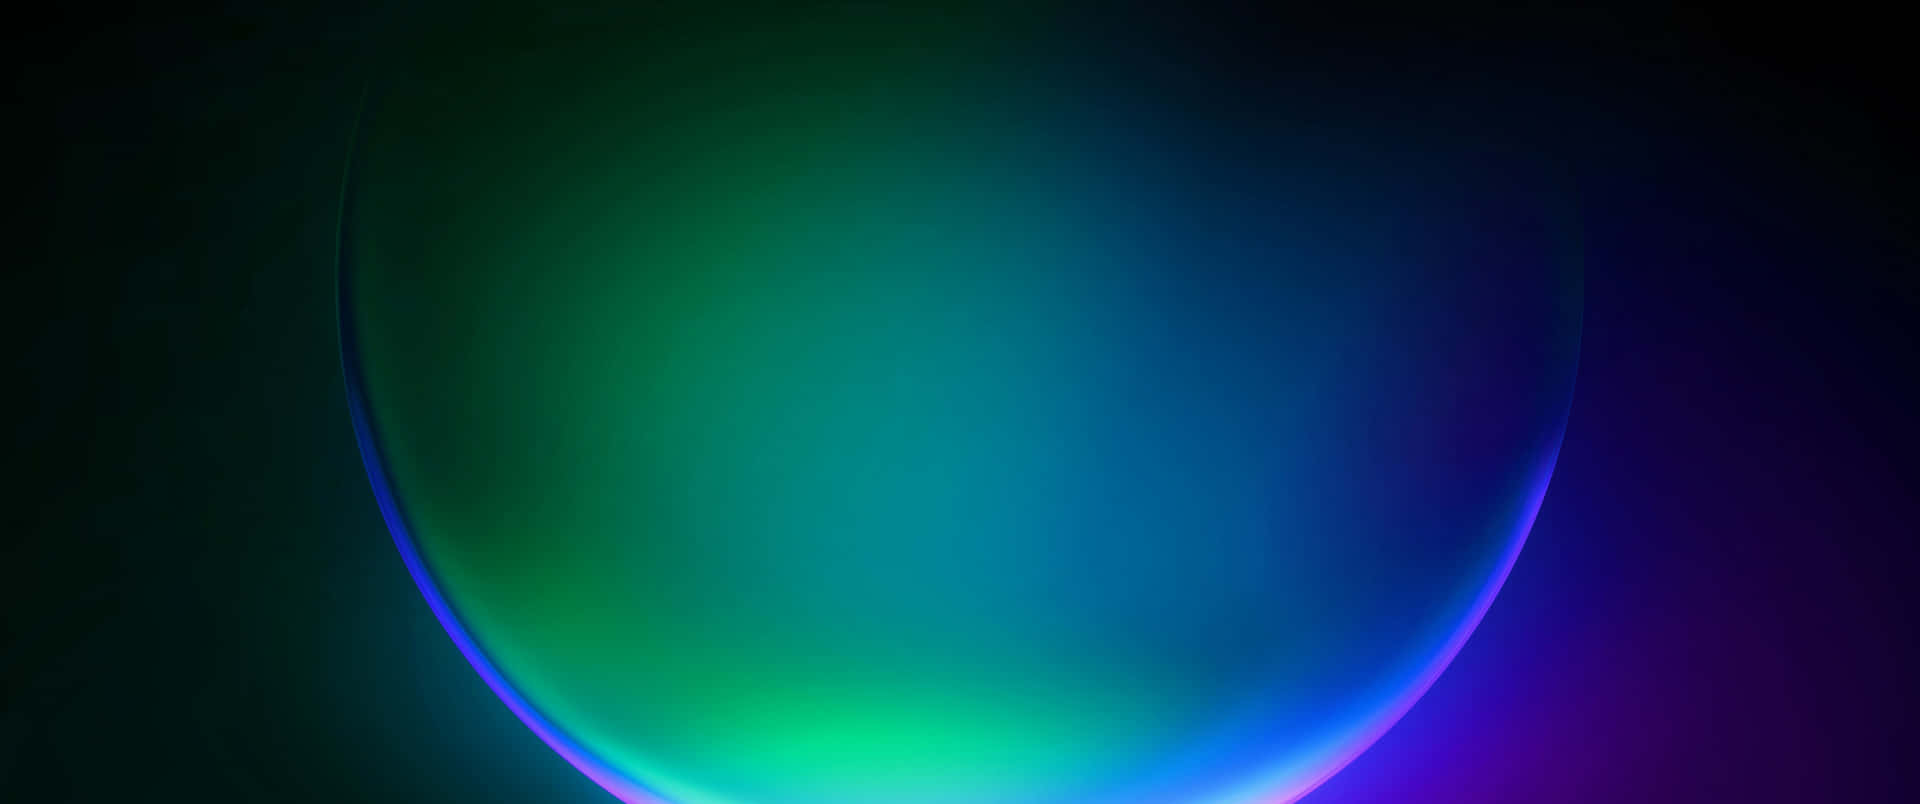 3440x1440p Blågrøn boblede baggrund